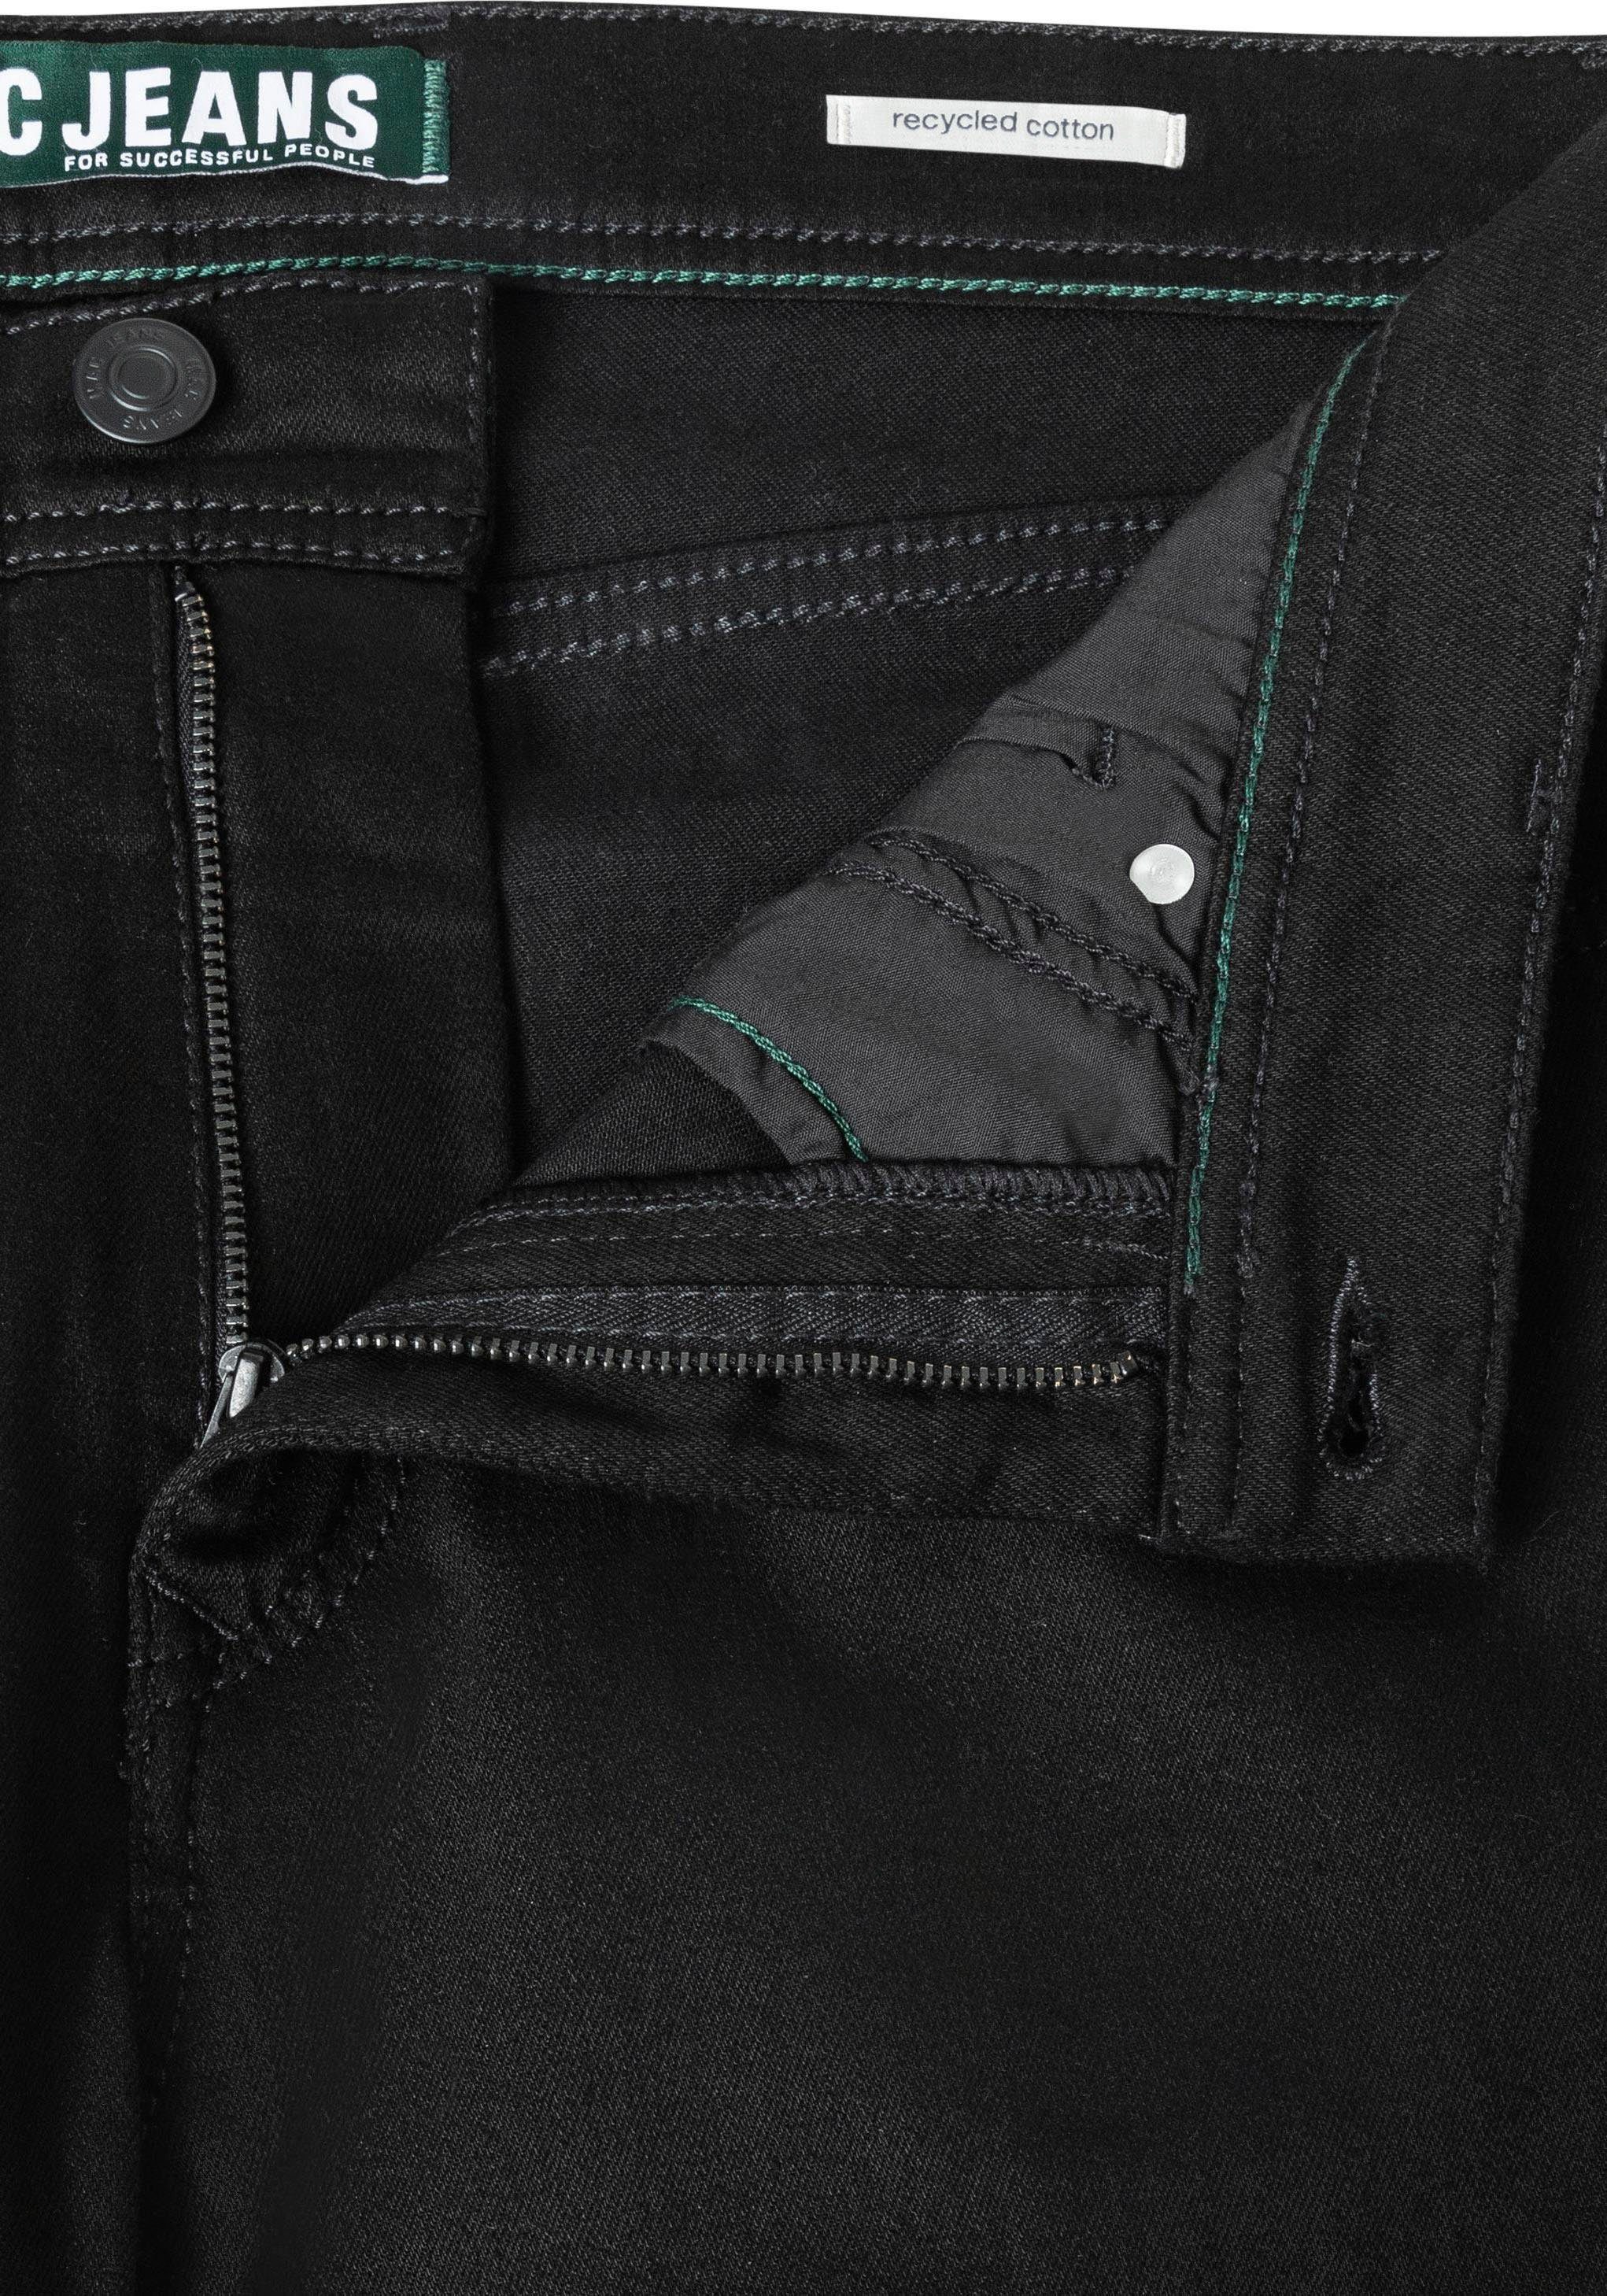 MAC Straight-Jeans Arne Optik, in Stretch black gepflegter mit stay